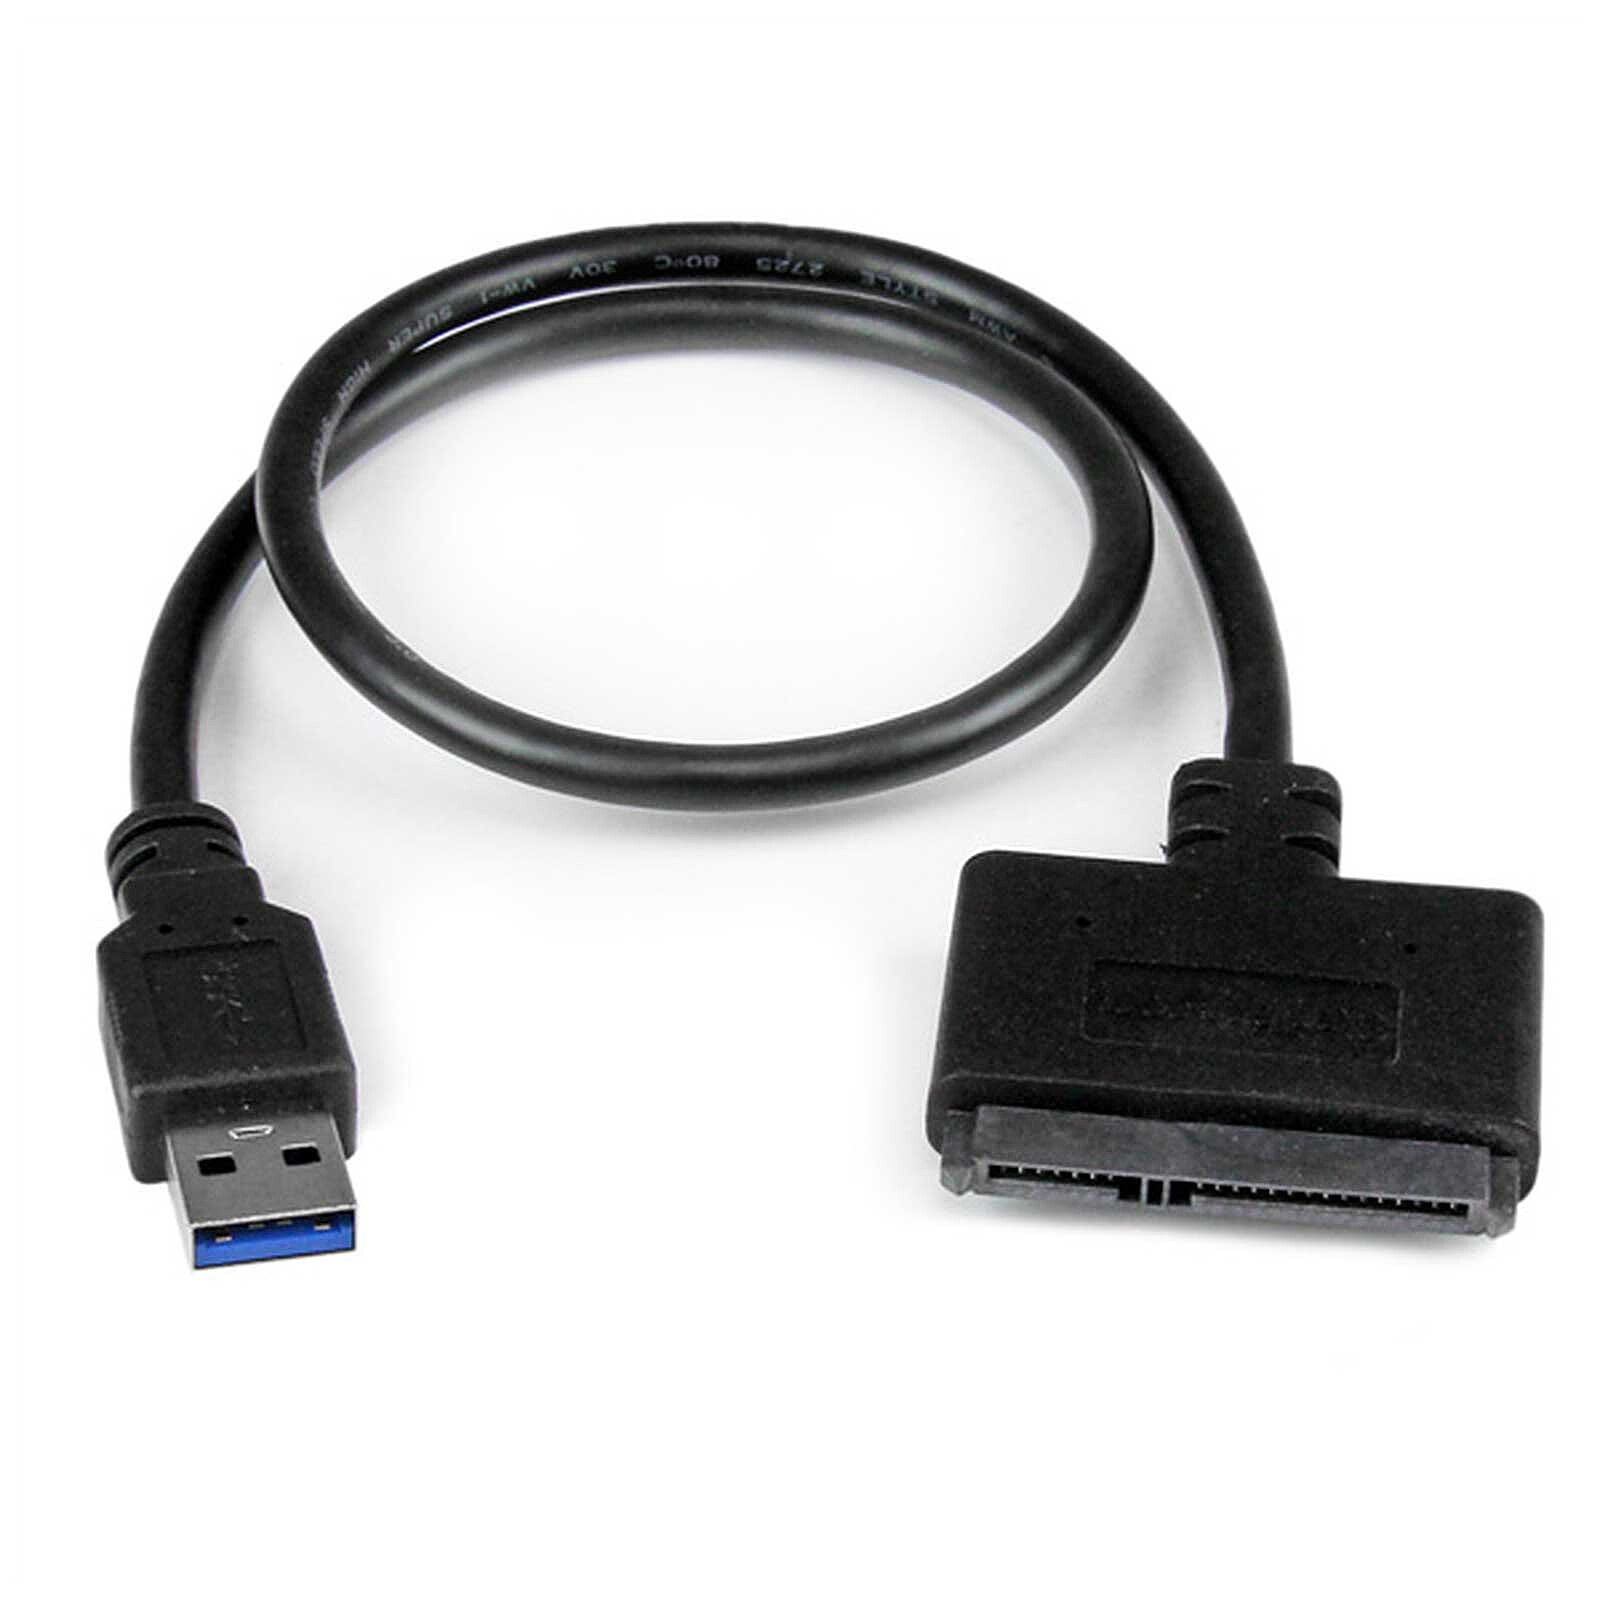 glemsom delvist beskyttelse StarTech.com Serial ATA III to USB 3.0 Adapter with UASP - Hard drive  accessories StarTech.com on LDLC